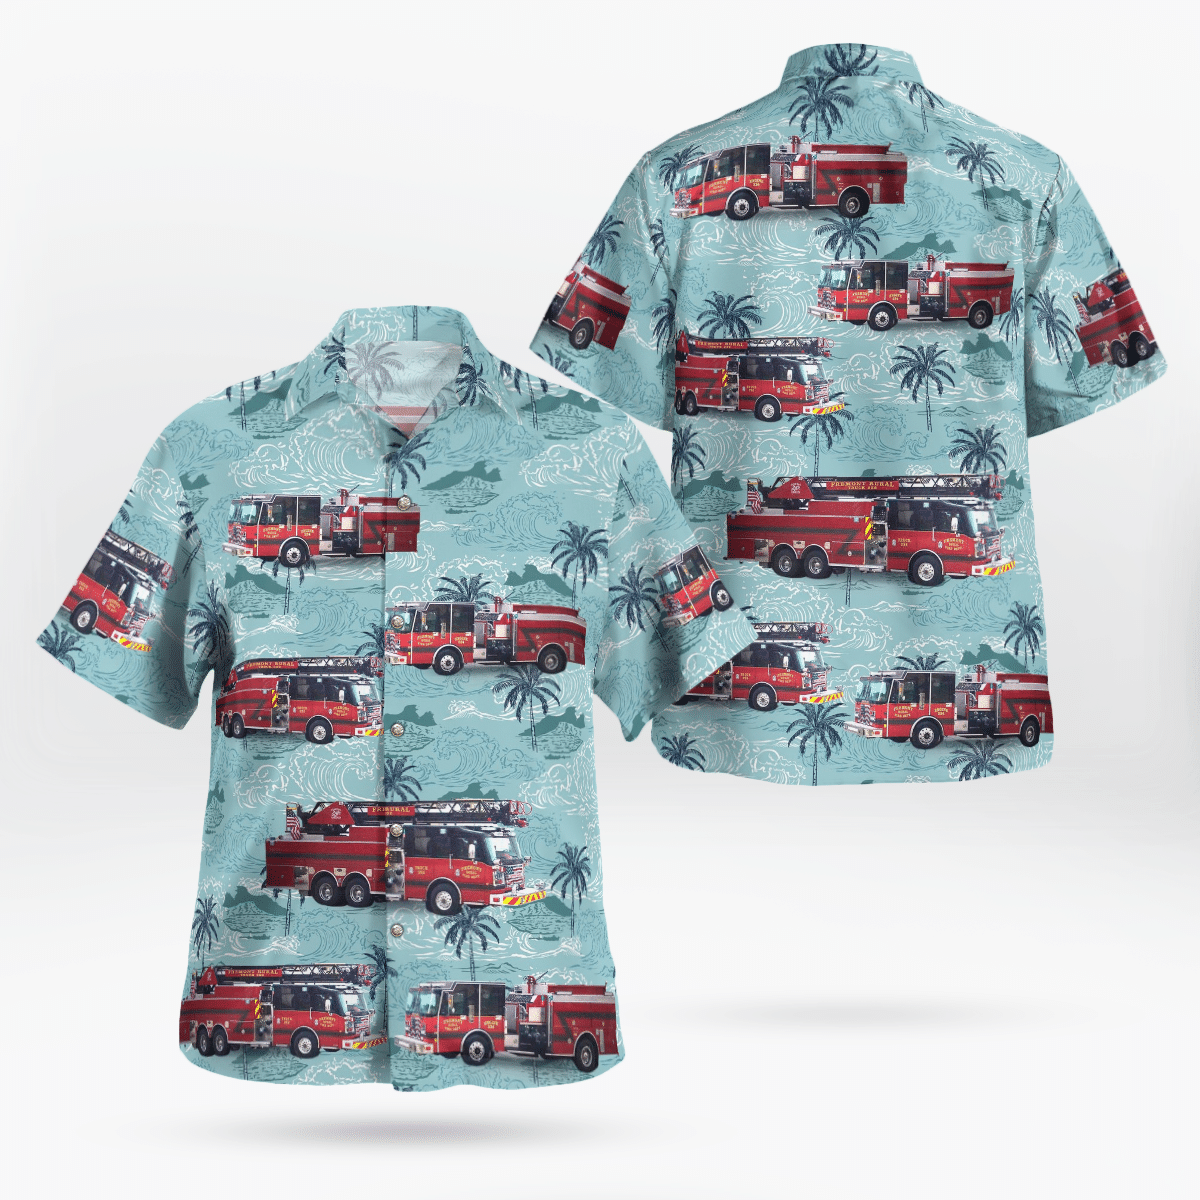 Listed below are some High-quality Aloha Shirt 101